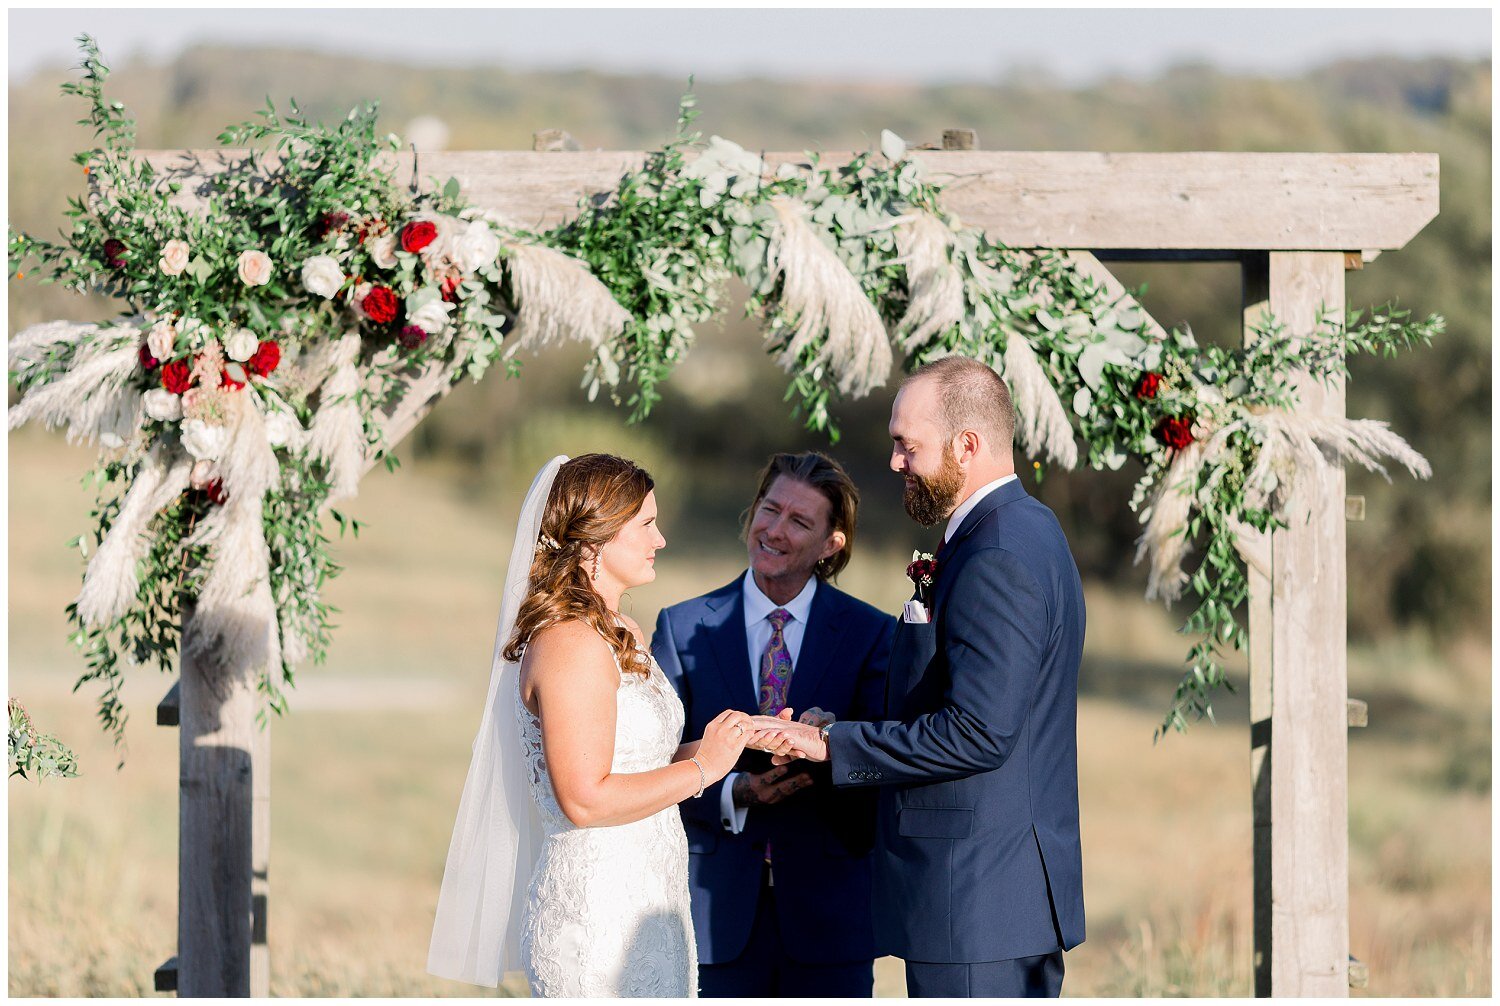 Fall-Barn-Style-Wedding-Pampas-Grass-Reds-Weston-Missouri-M-and-C-10-16-20-Elizabeth-Ladean-Photography-photo-_8701.jpg